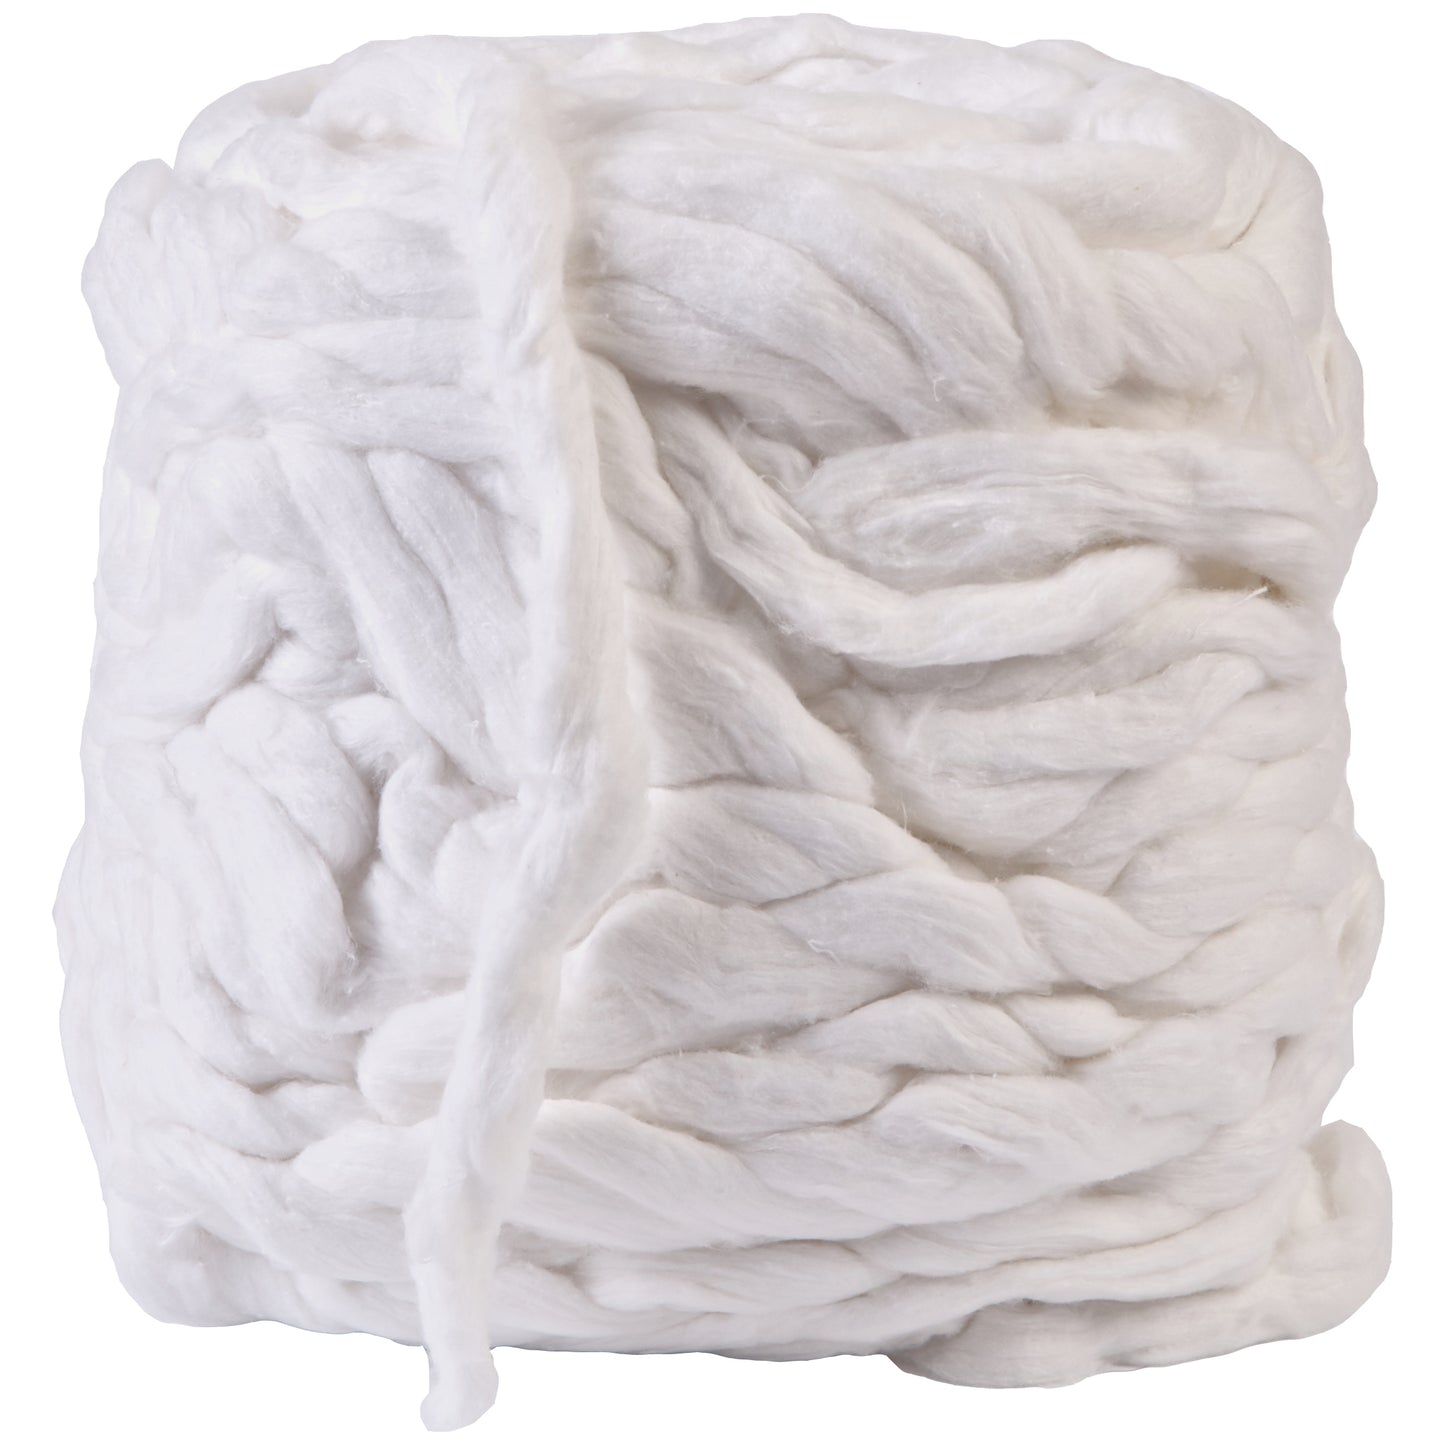 Cotton Neck Wool 2 x 1/2lb- Case of 12